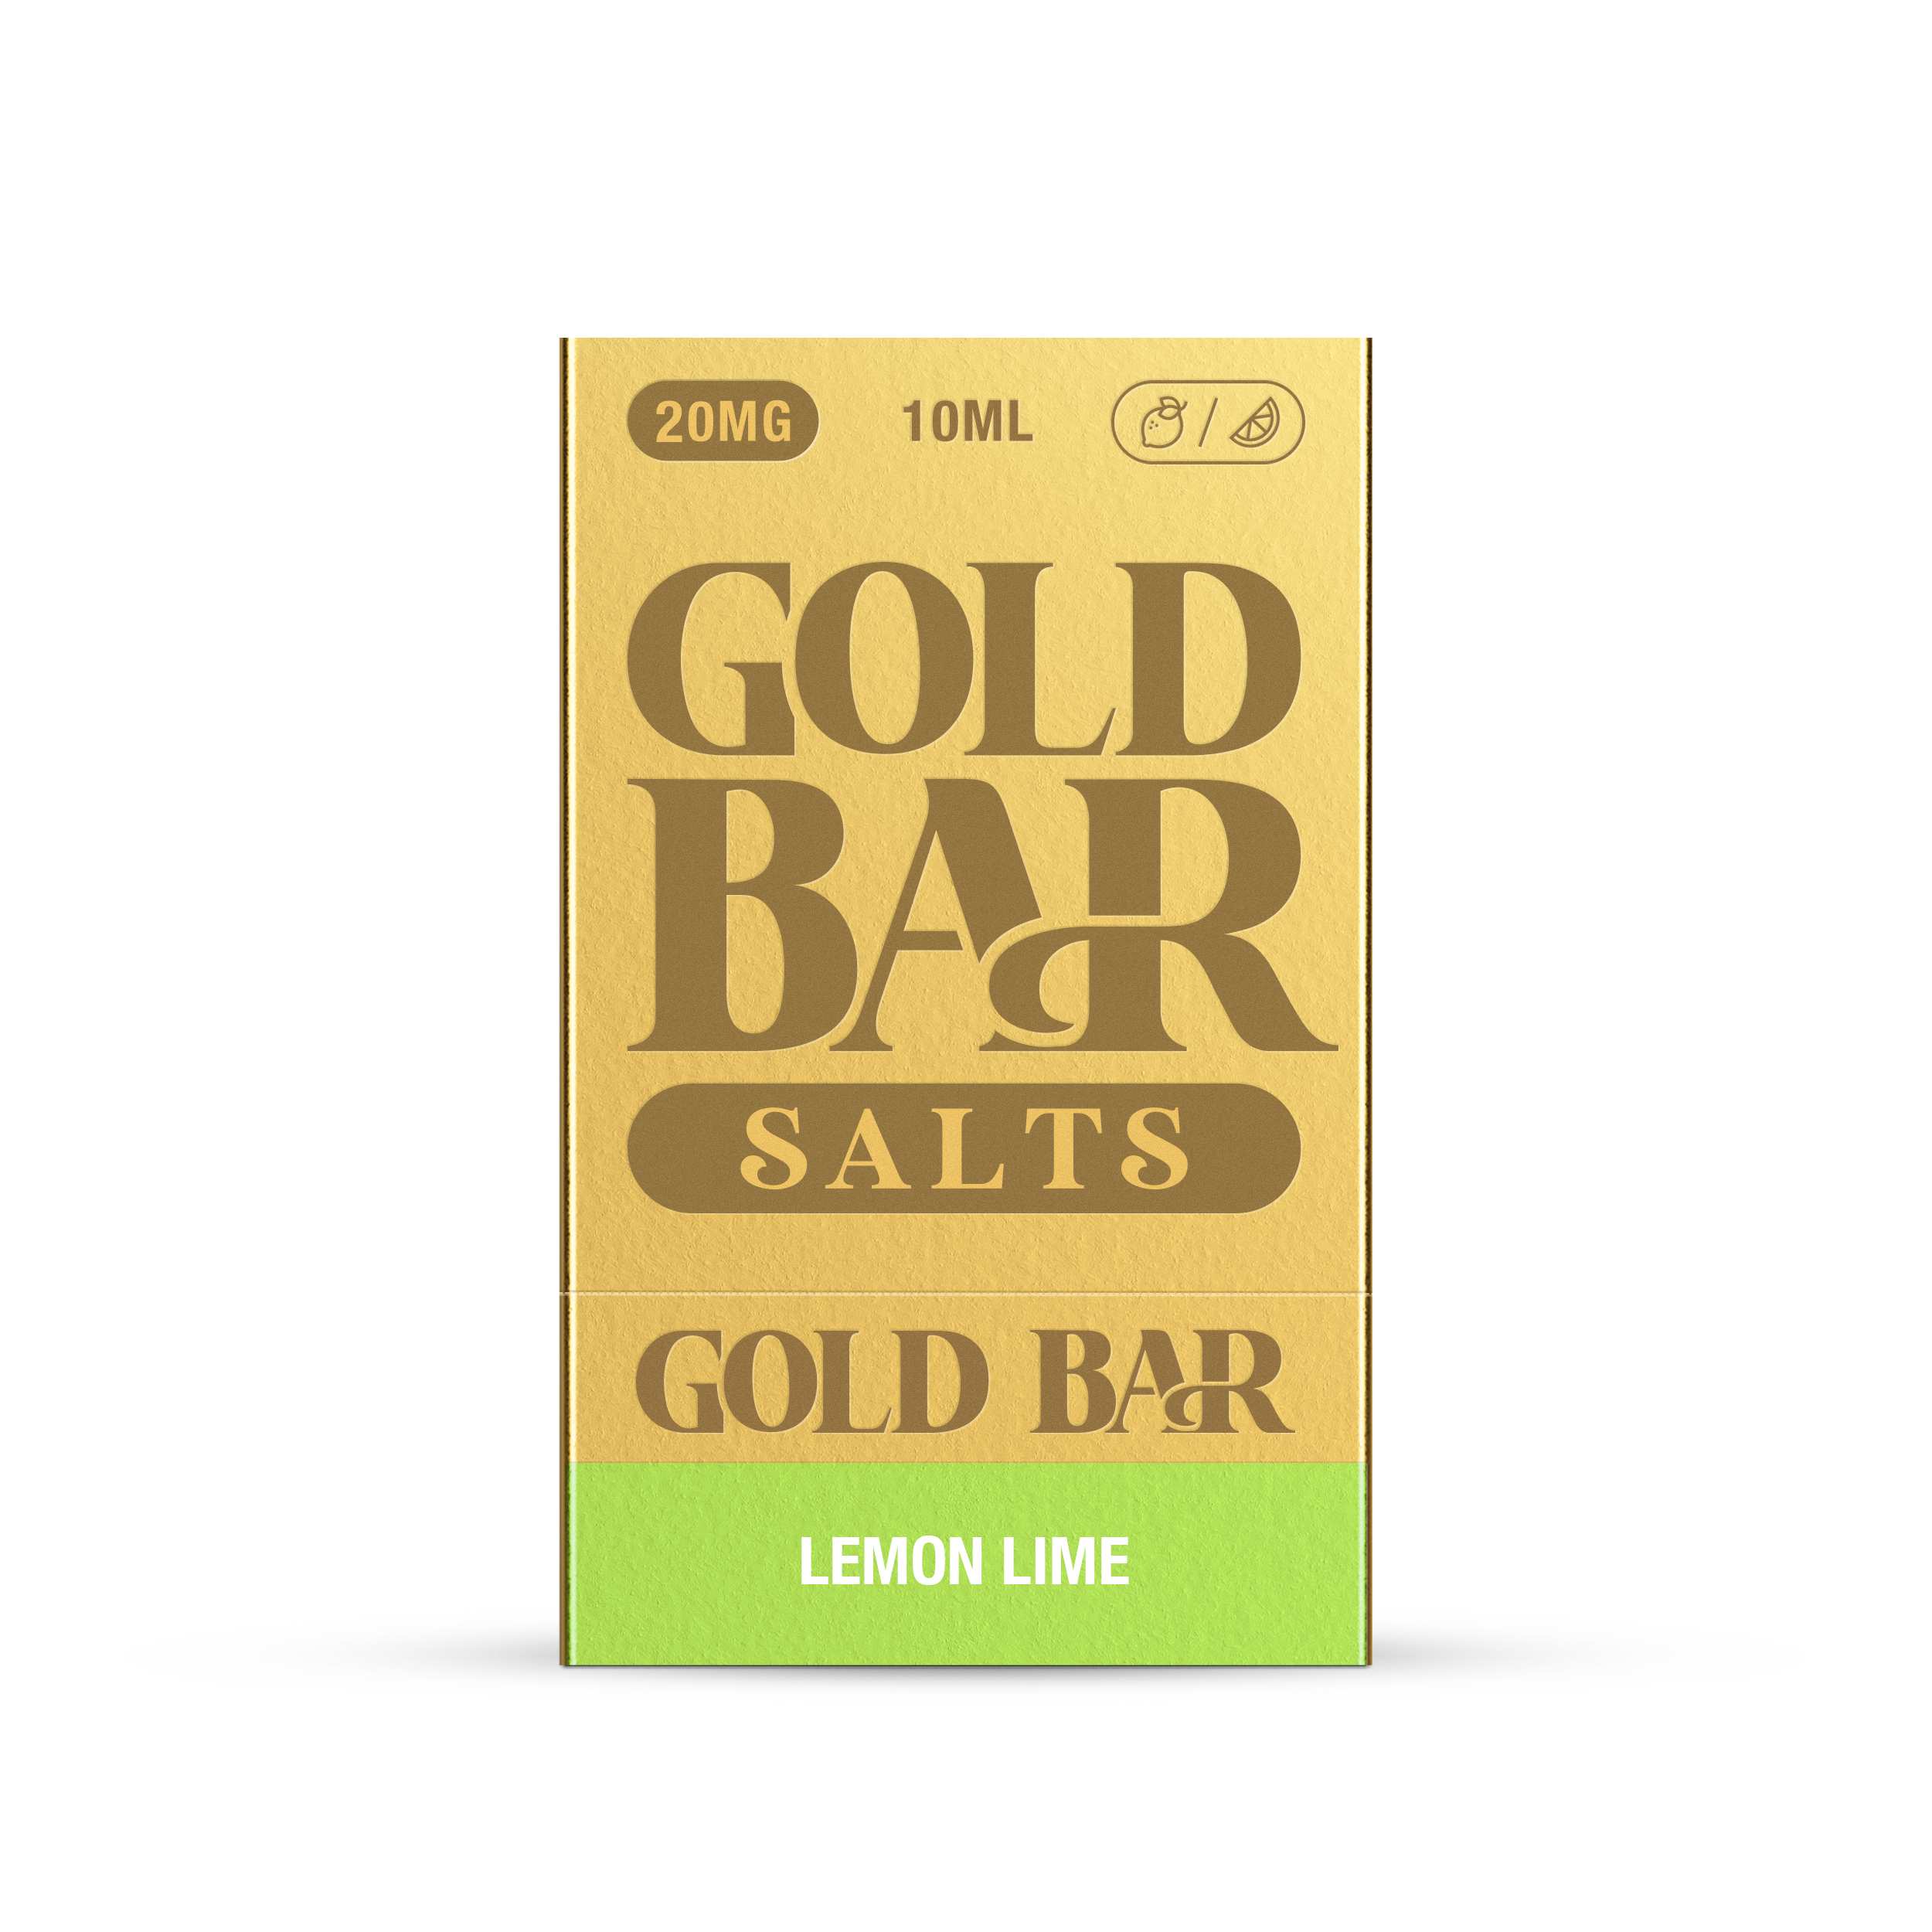 GOLD BAR SALTS 10ML LEMON LIME (10)